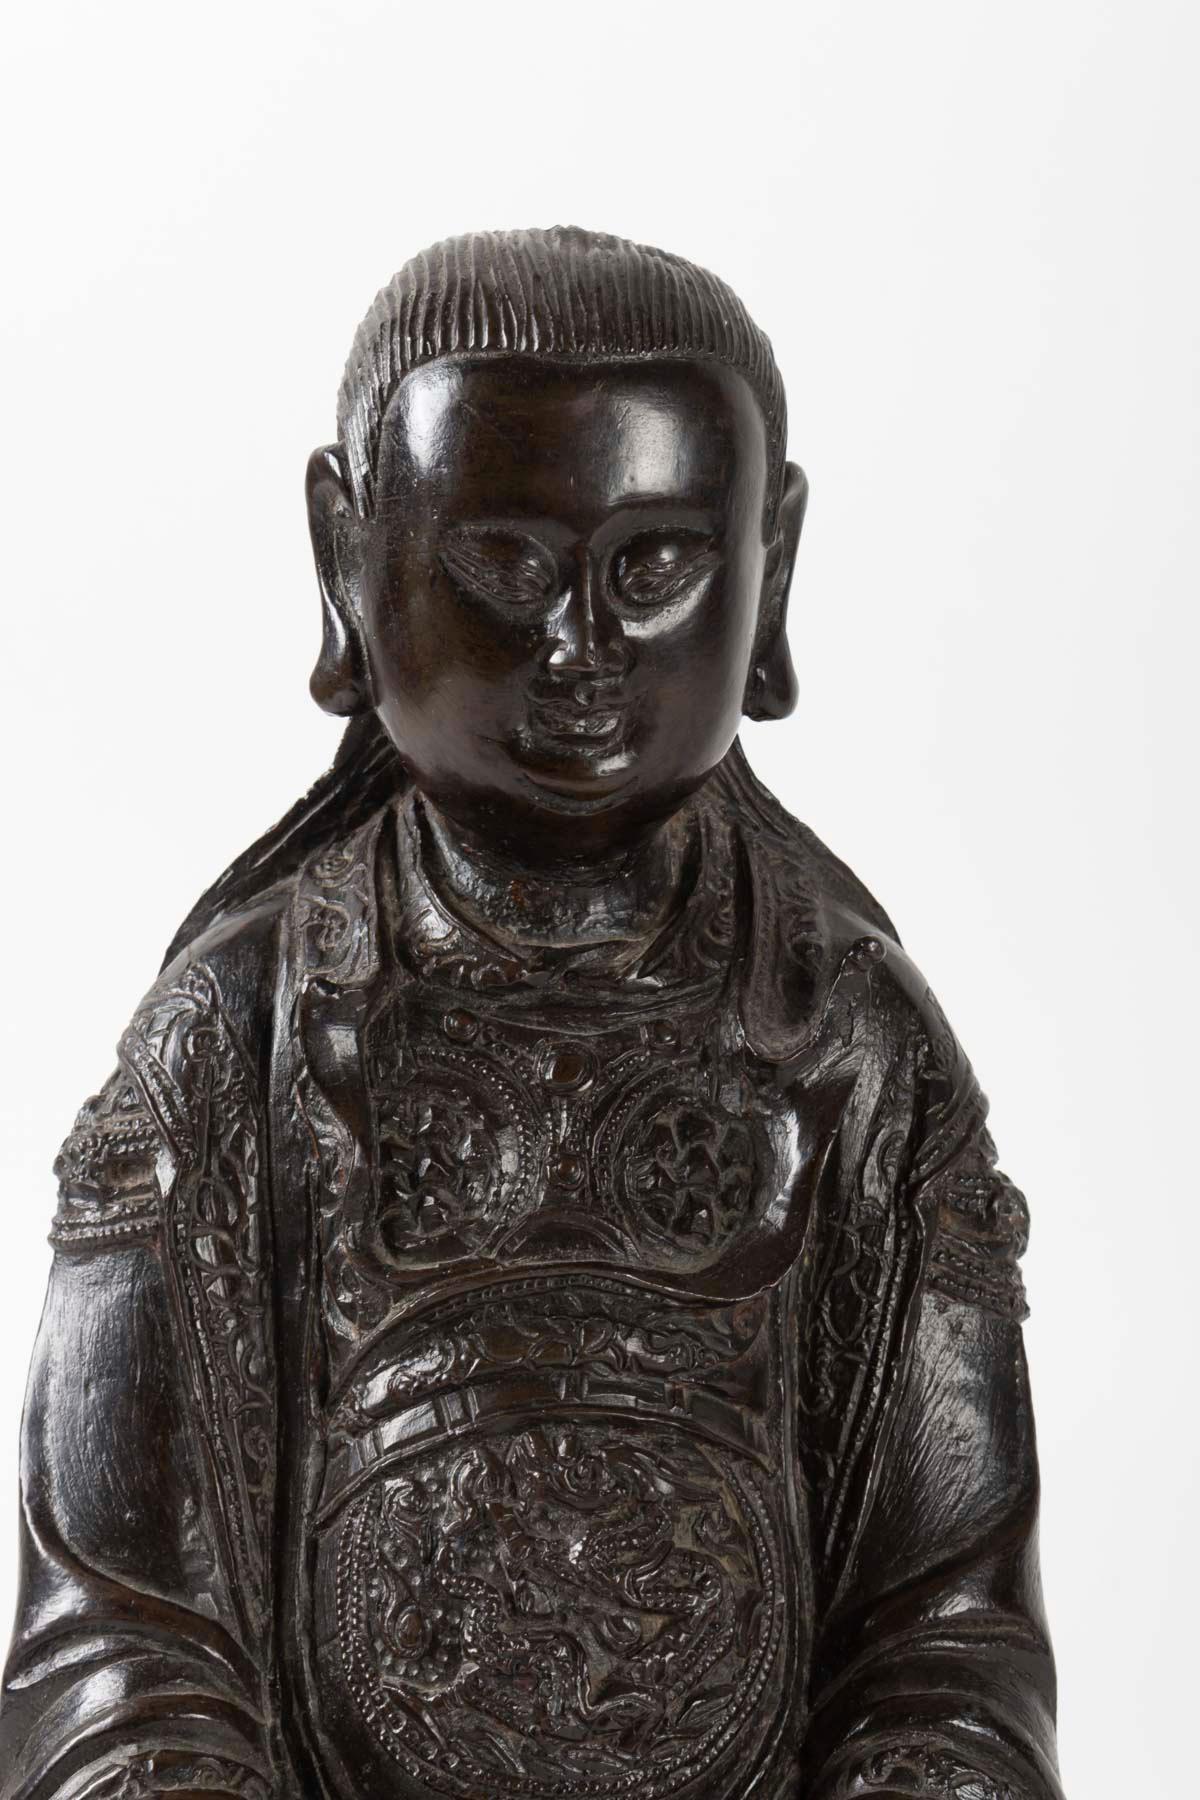 Bronze Buddha, China, 17th century
Measures: H 33 cm, W 20 cm, D 12 cm.